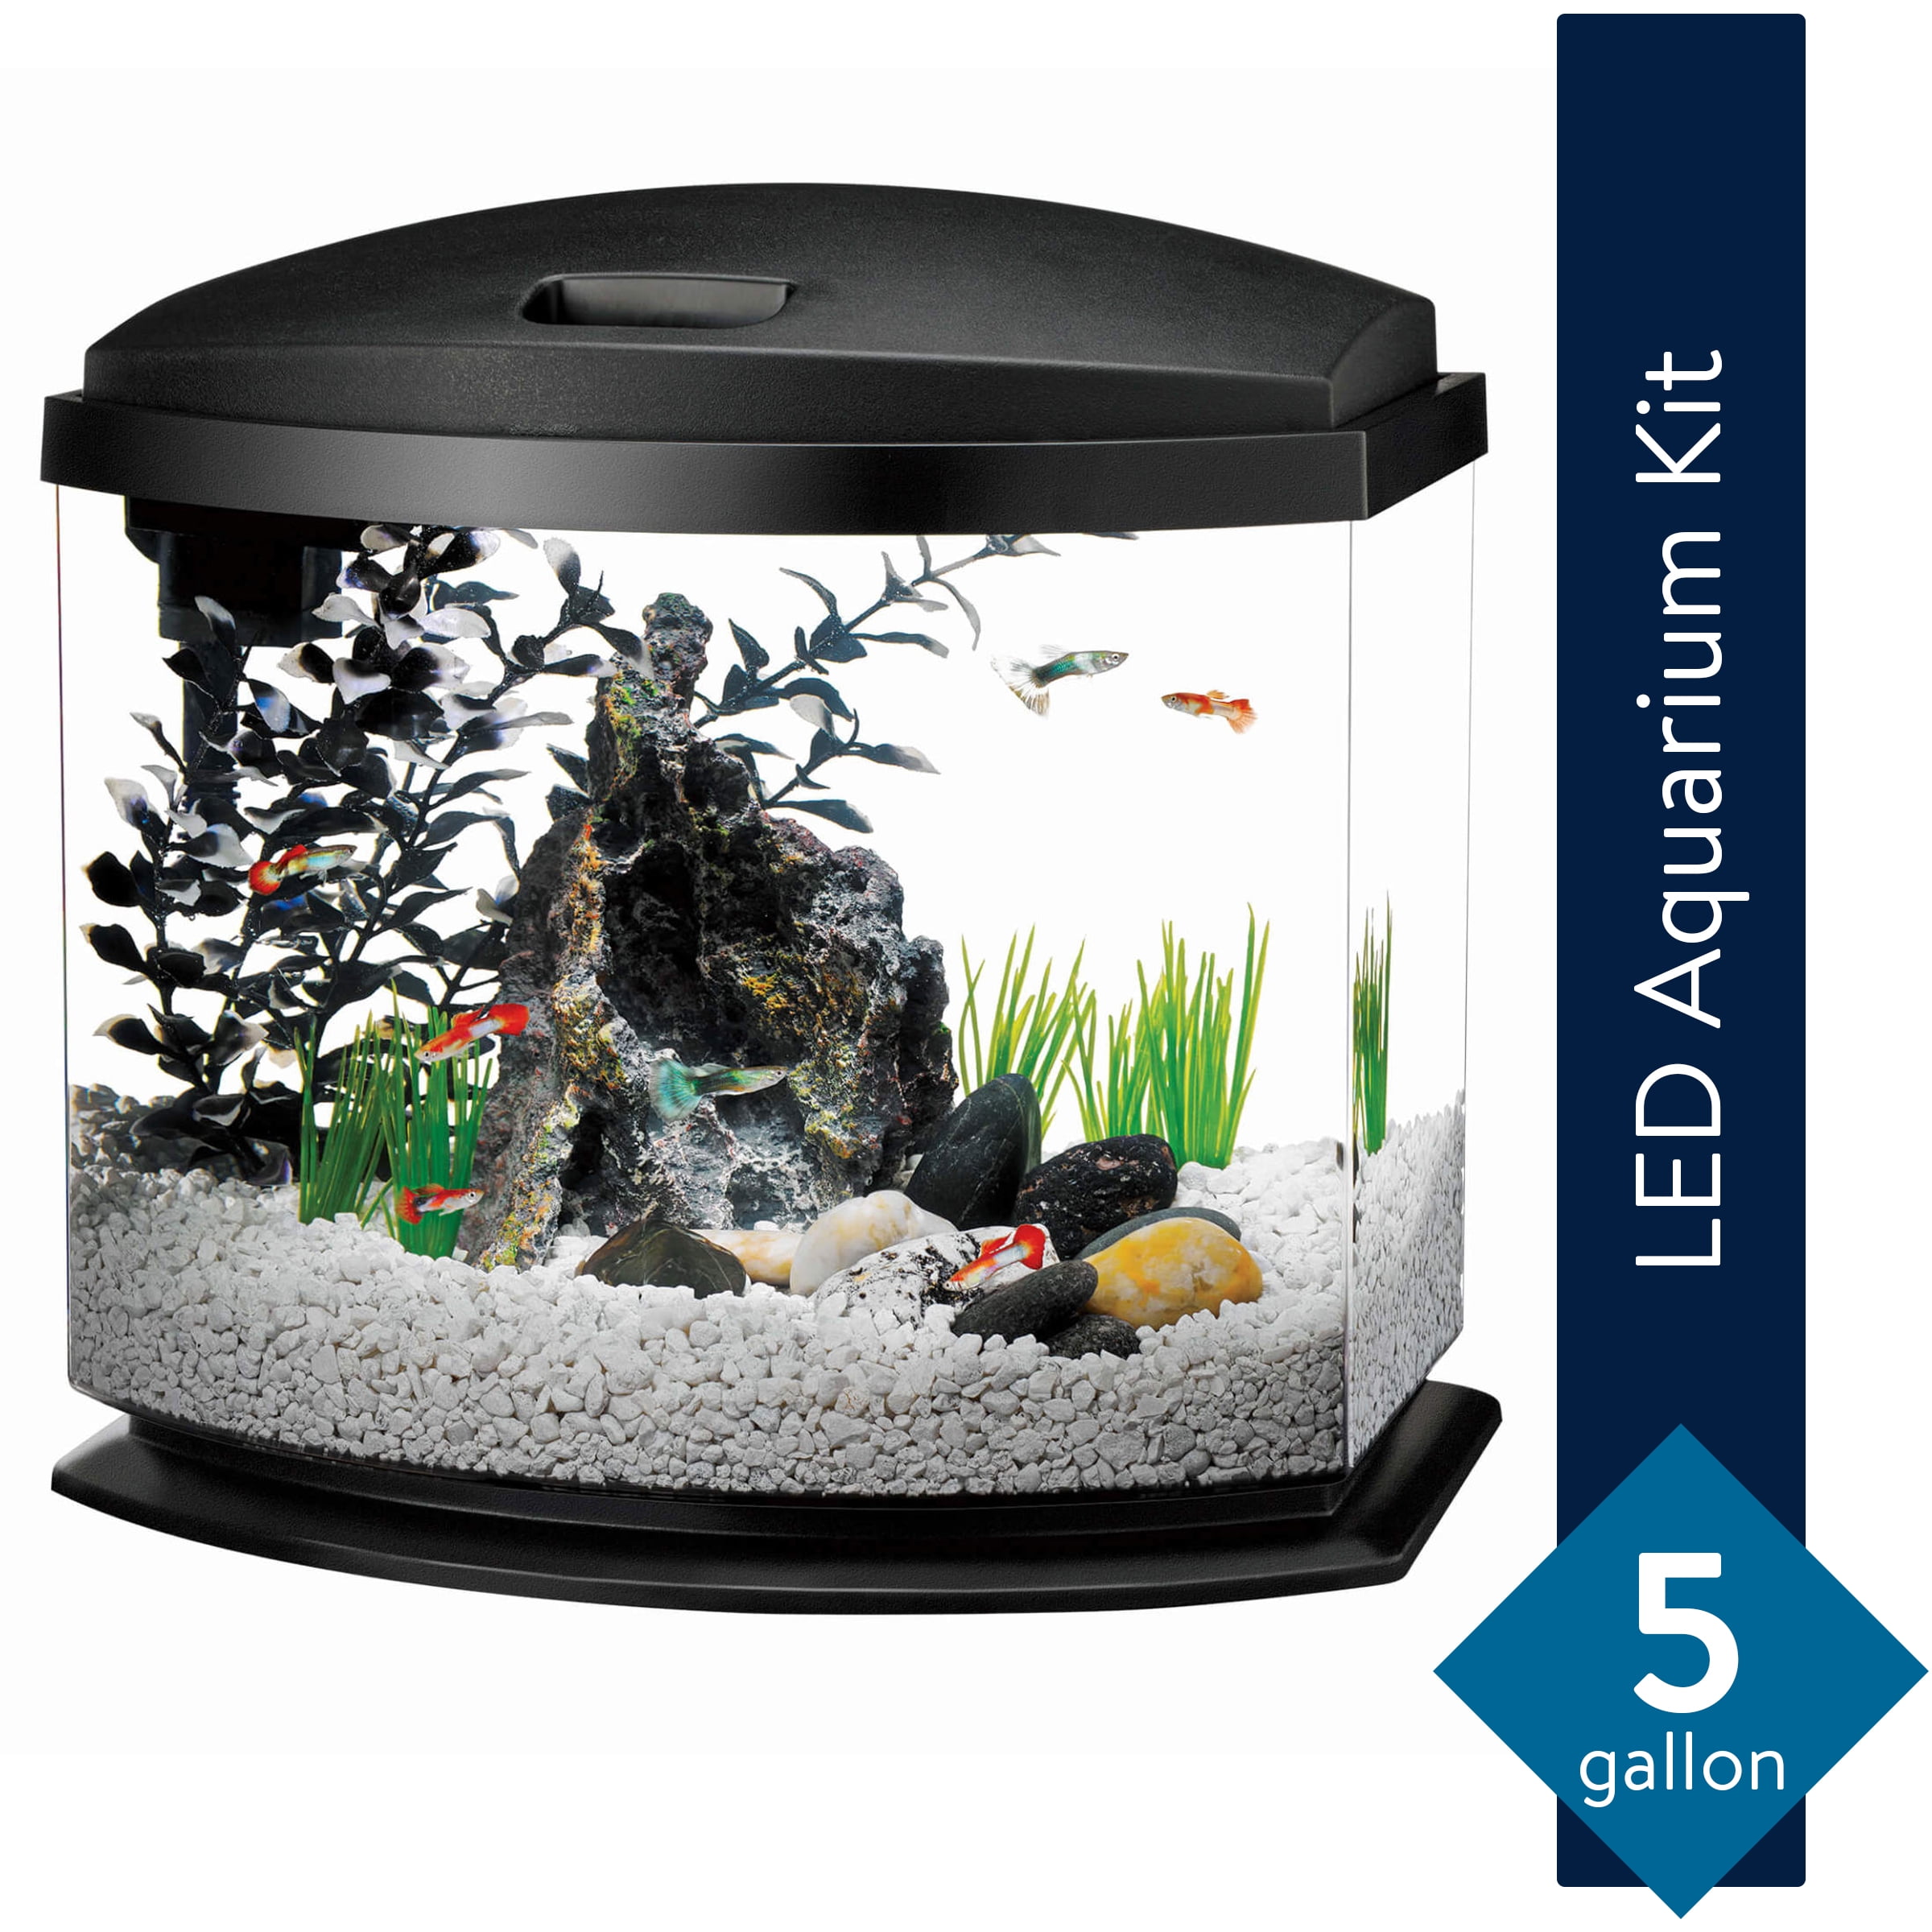 Aqueon Minibow Aquarium Led Starter Kit 5 Gallon Black Walmart Com